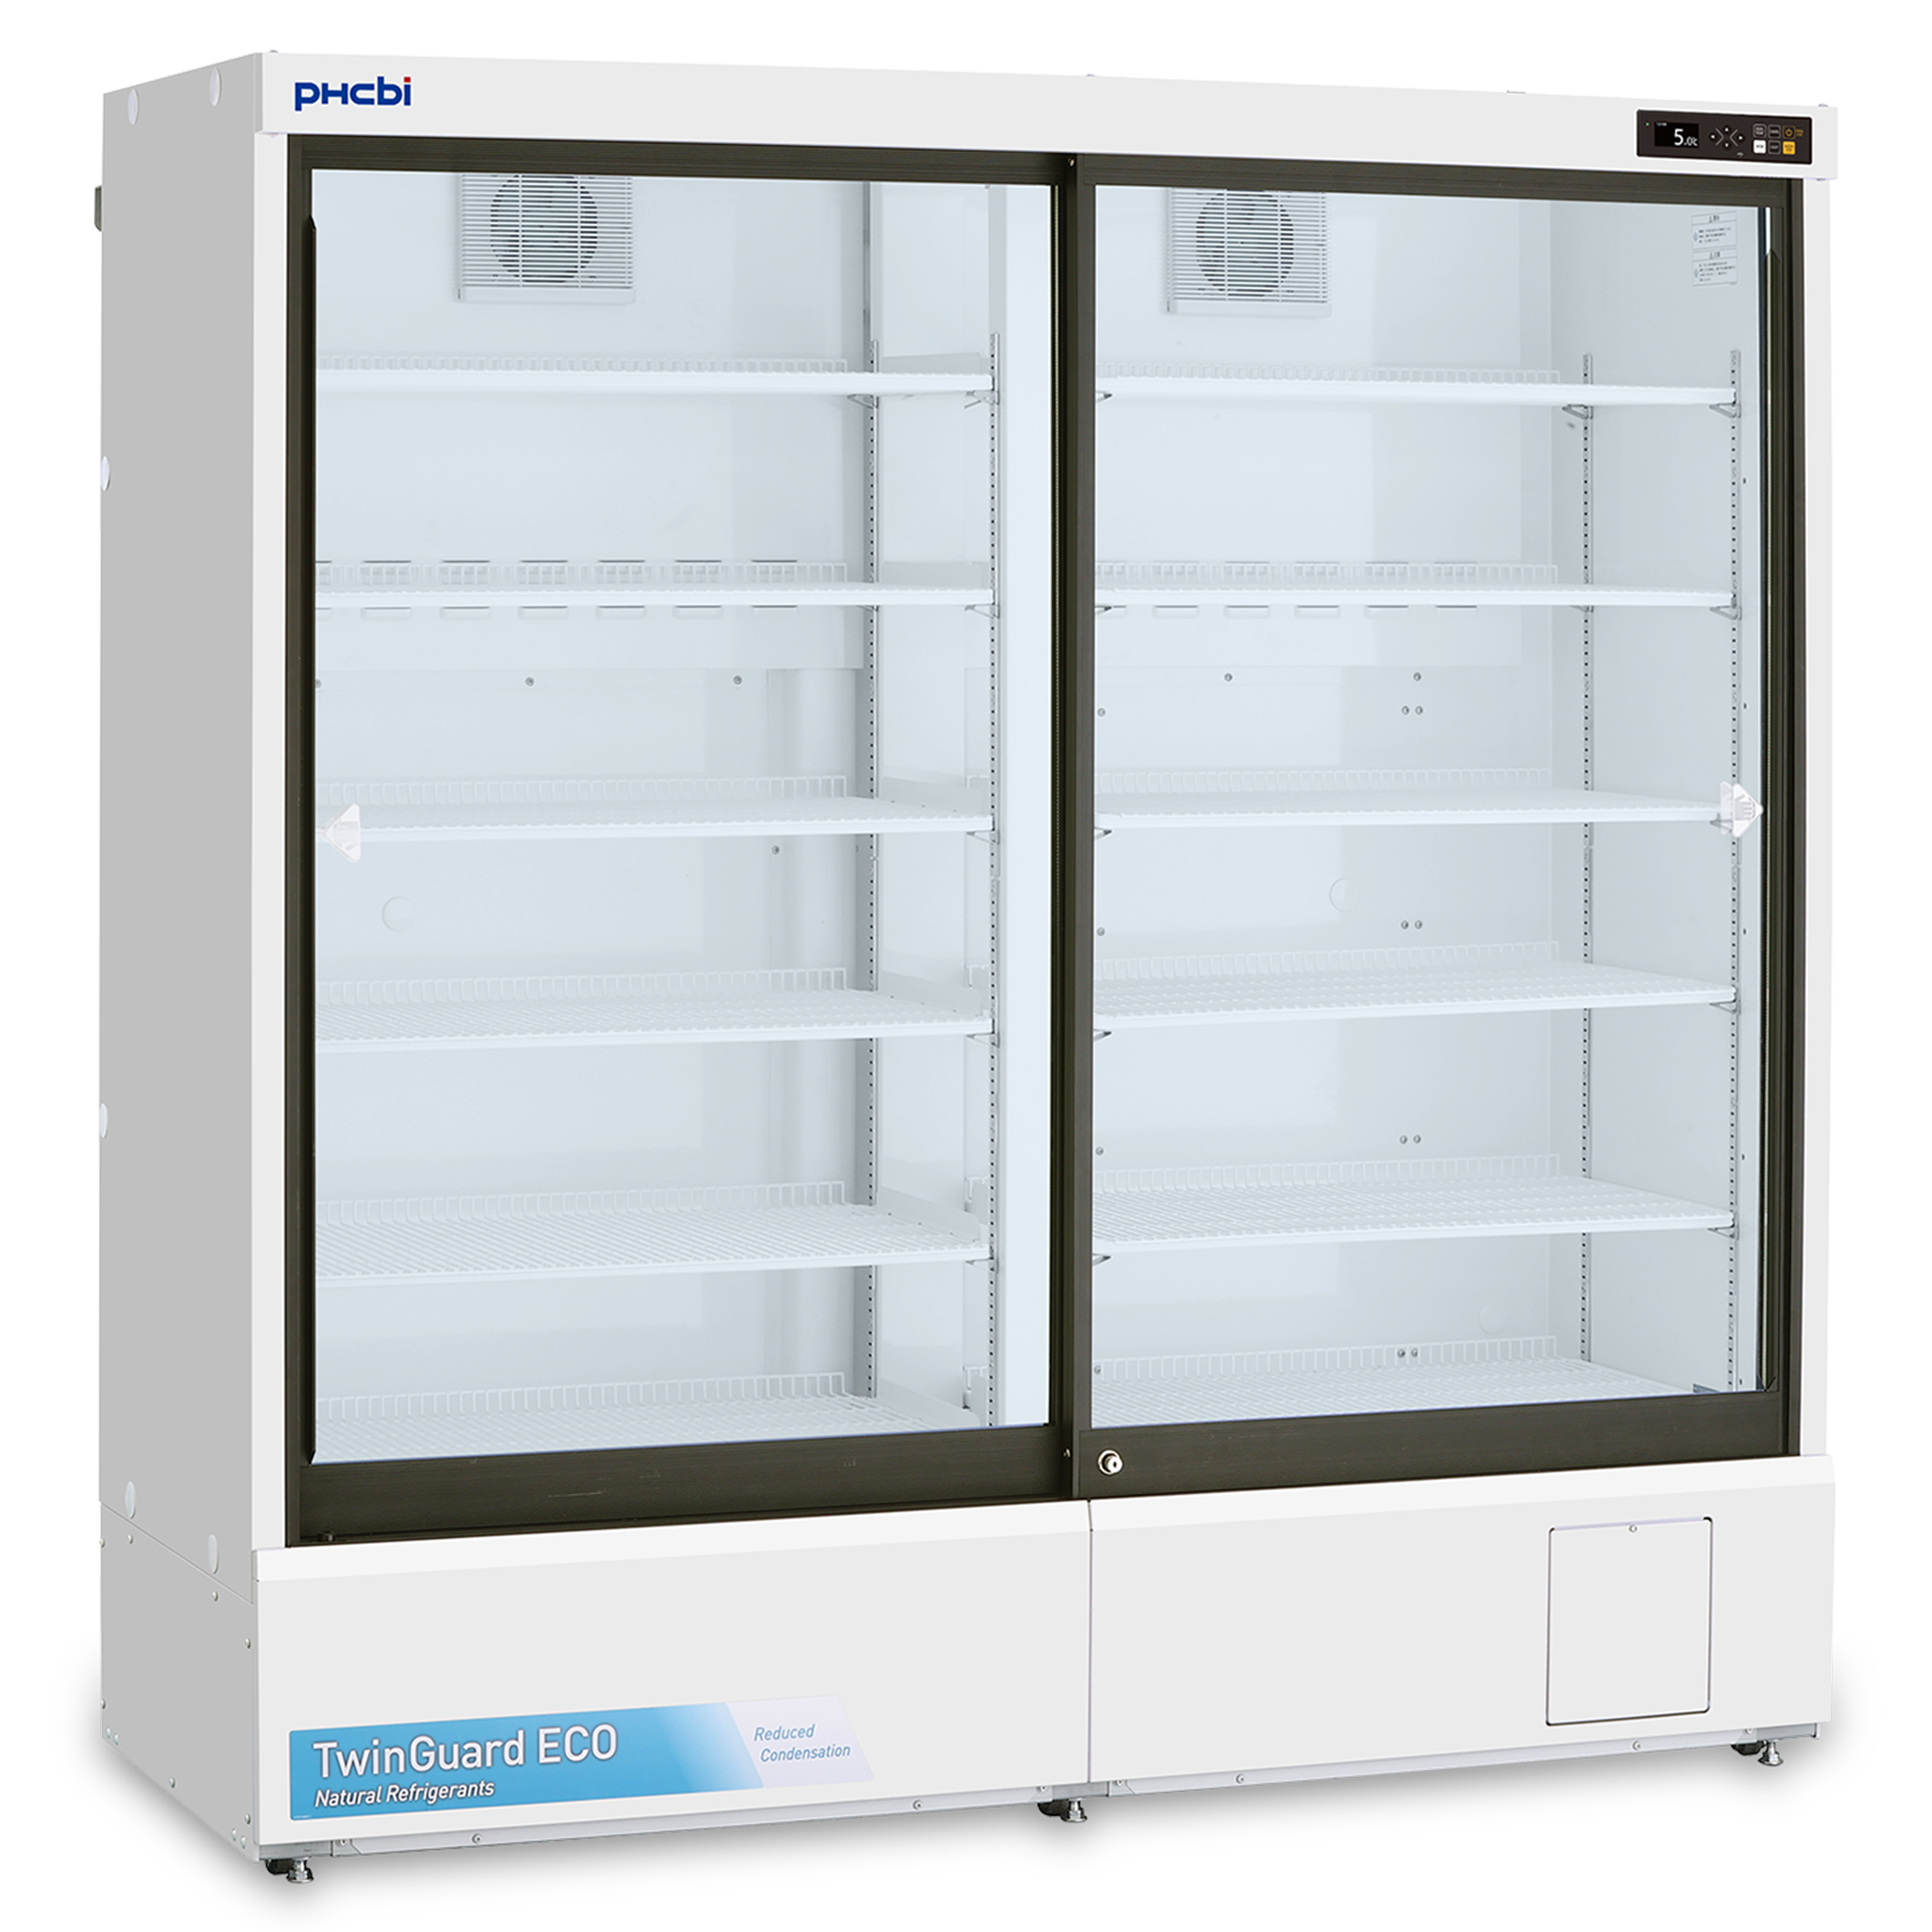 Energy Star certified vaccine storage refrigerator MPR-1014-PA